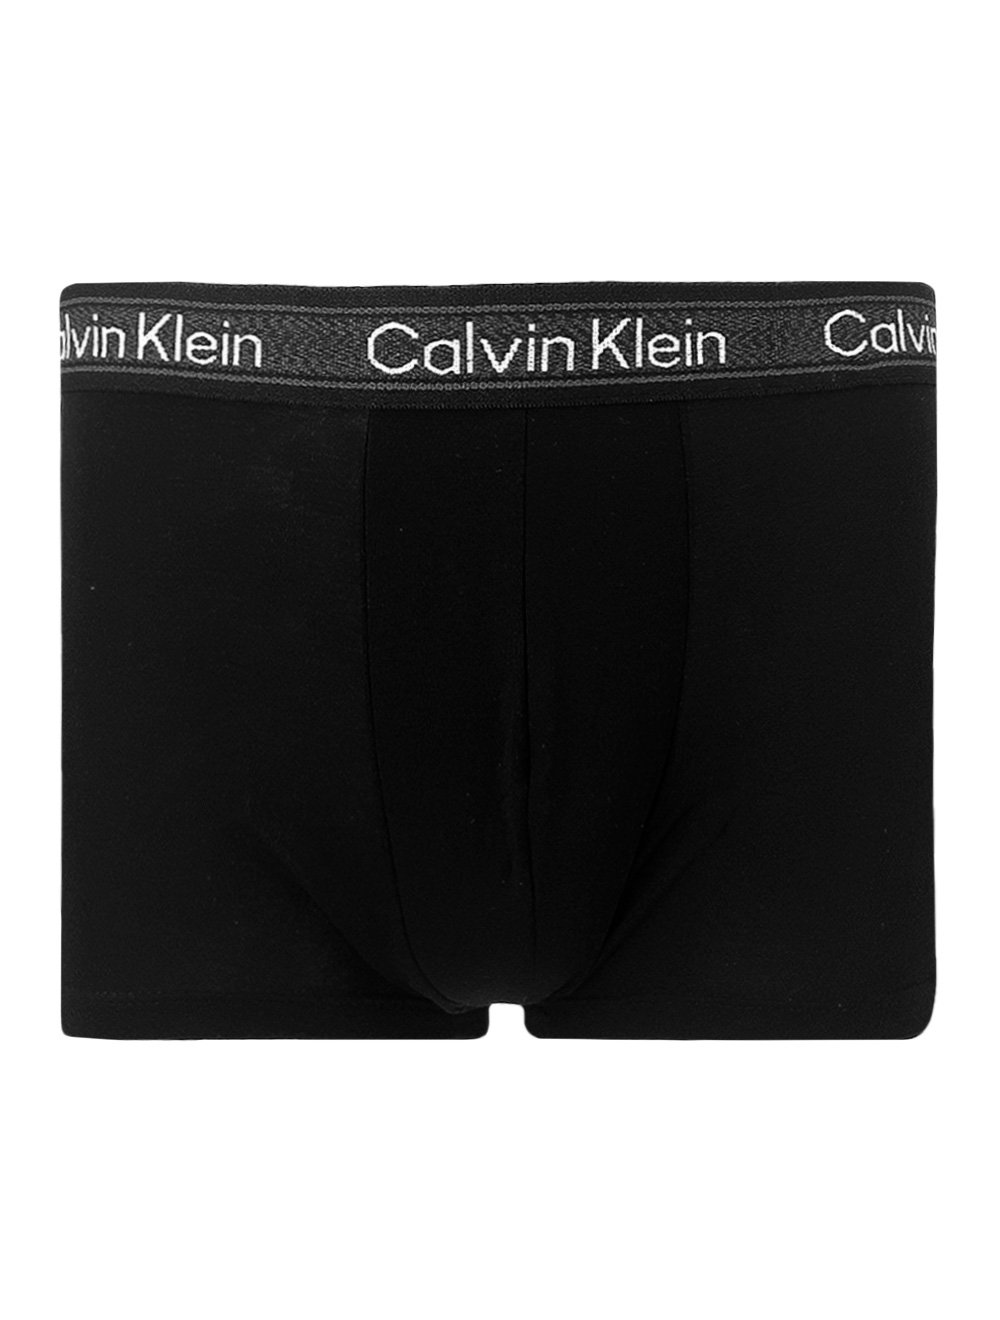 Cueca Calvin Klein Trunk Modal Stripe Preta C10.12 PT00 1UN